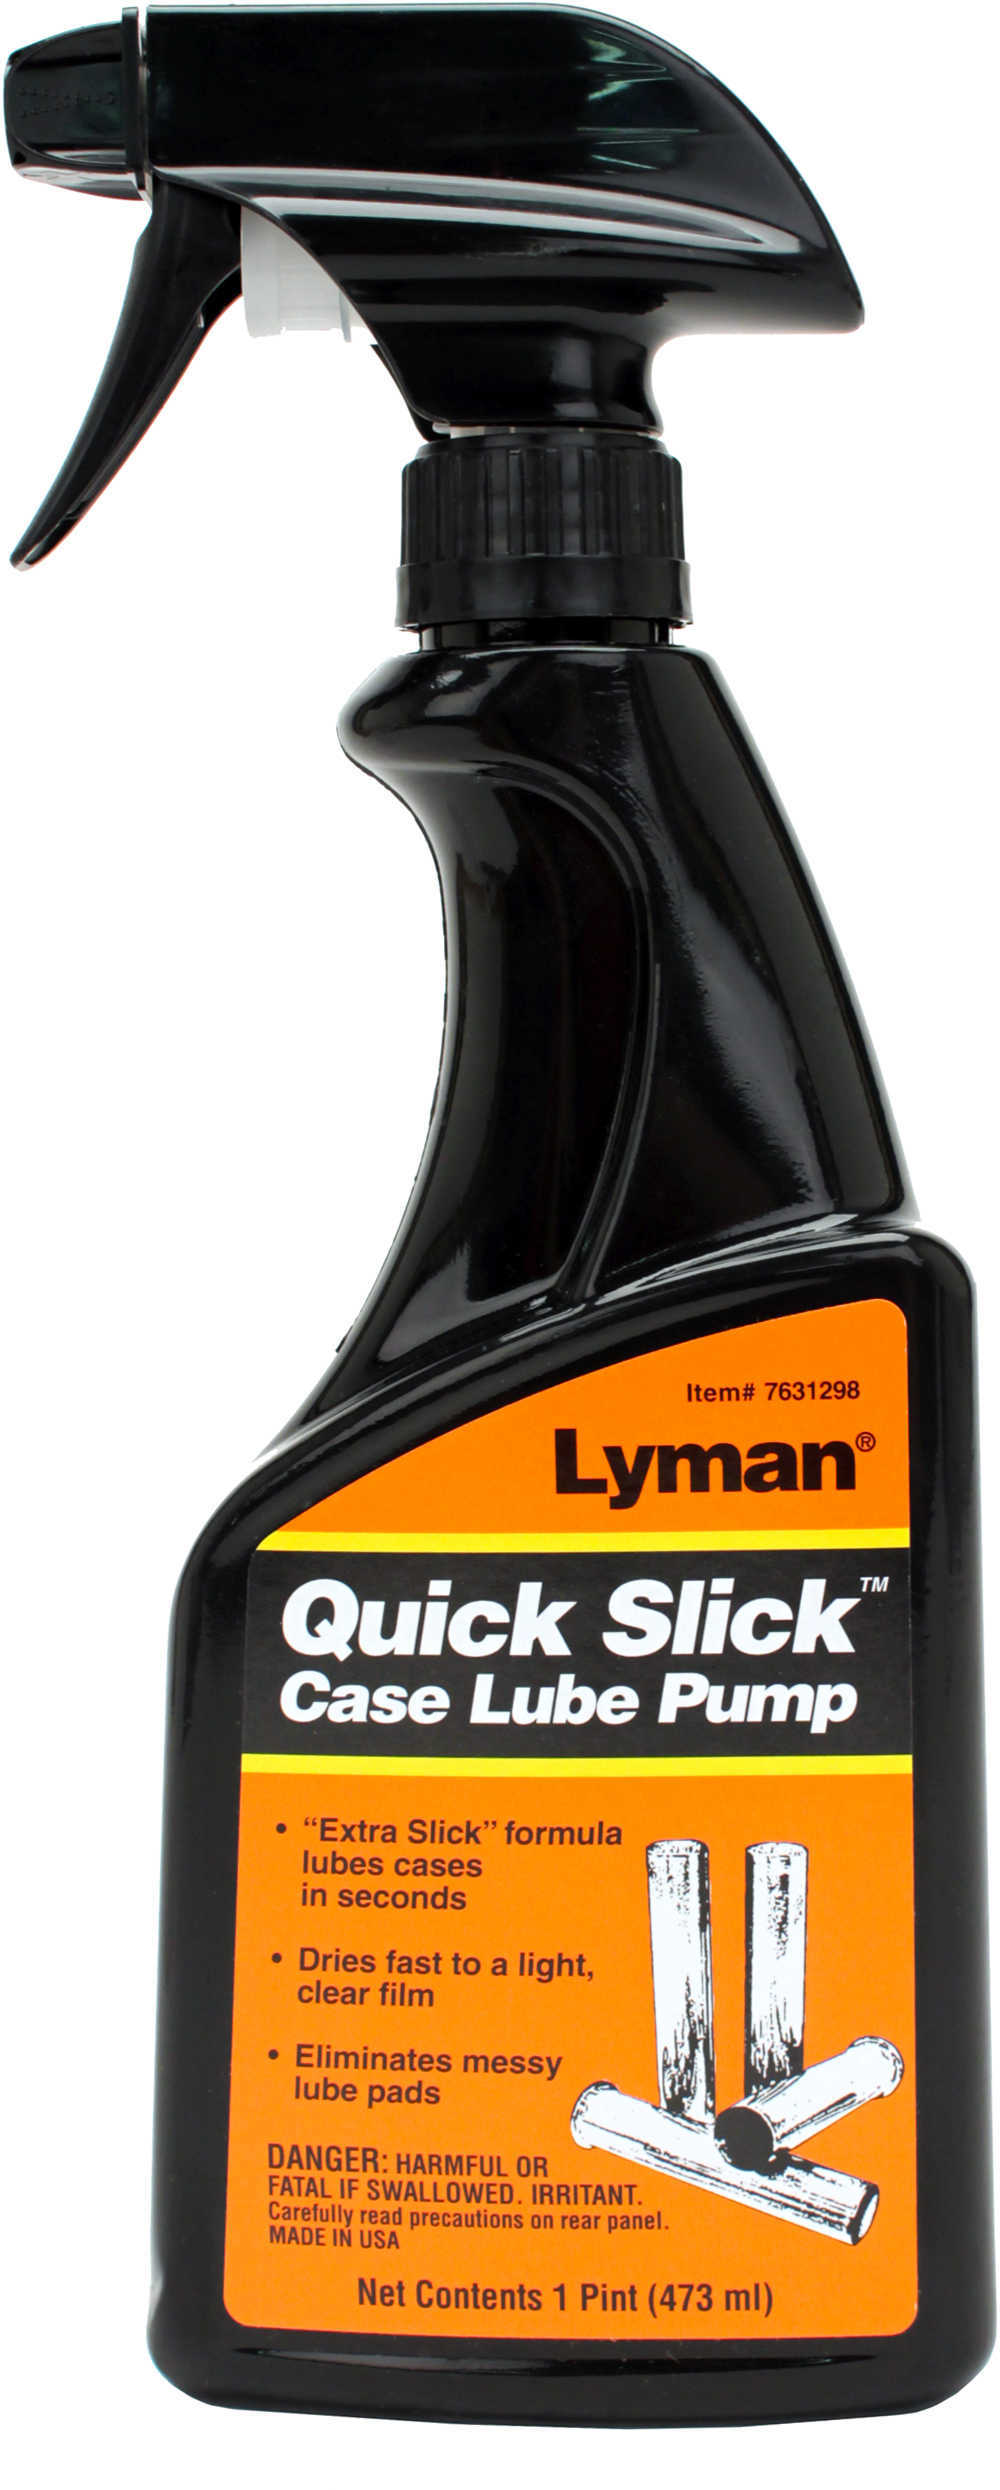 Lyman "Quick Slick" Pump Spray Case Lube(16 oz) 7631298